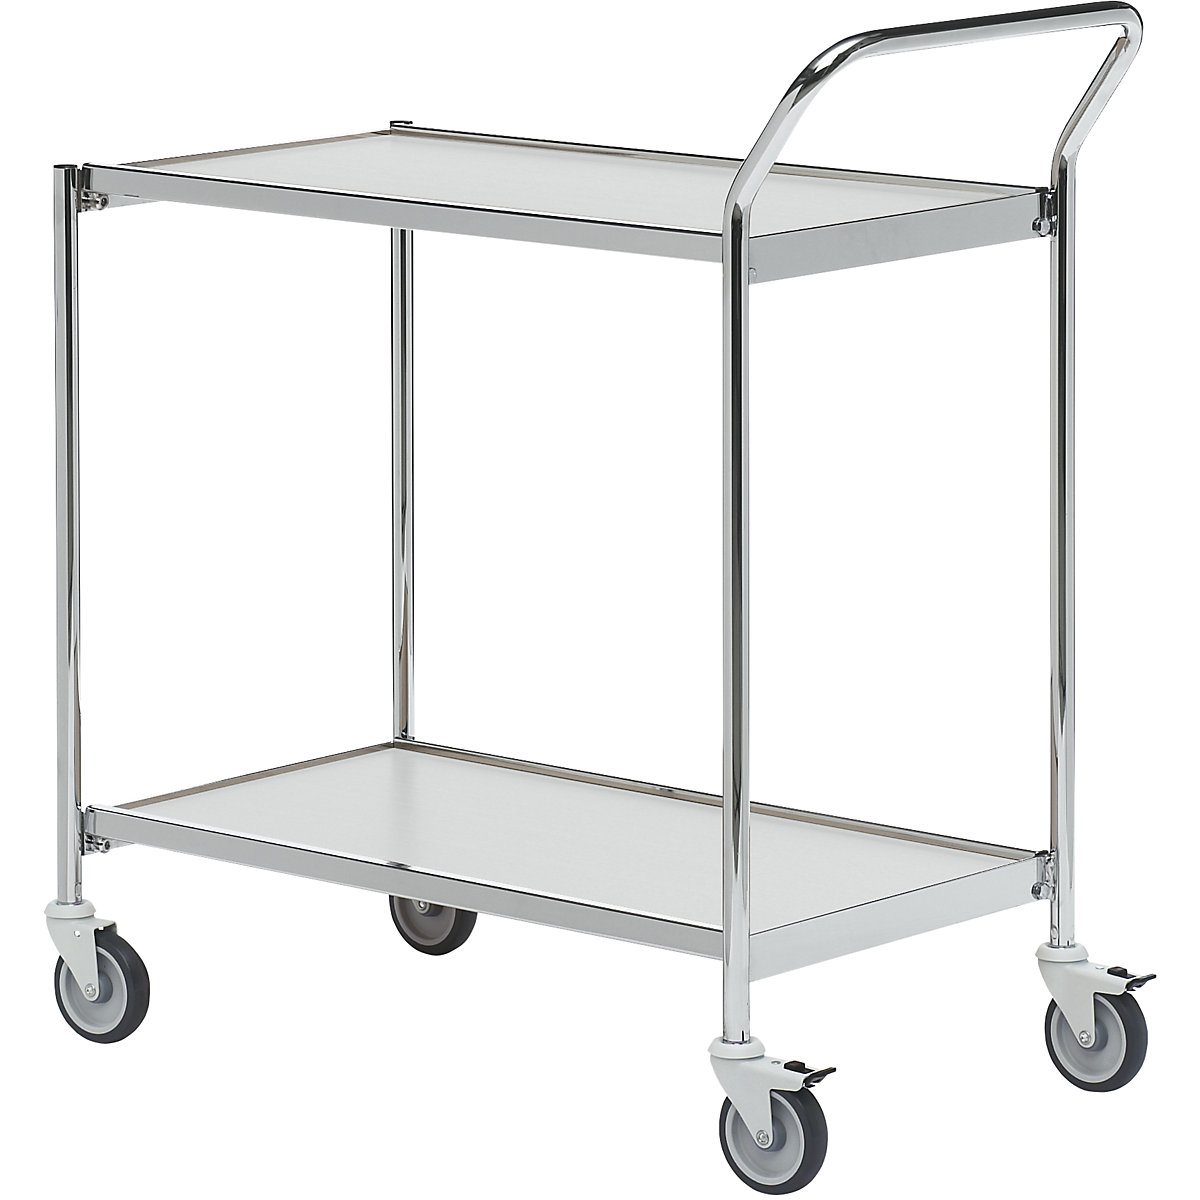 Stolový vozík – HelgeNyberg, 2 etáže, d x š 1000 x 420 mm, chrom / šedá, od 5 ks-28